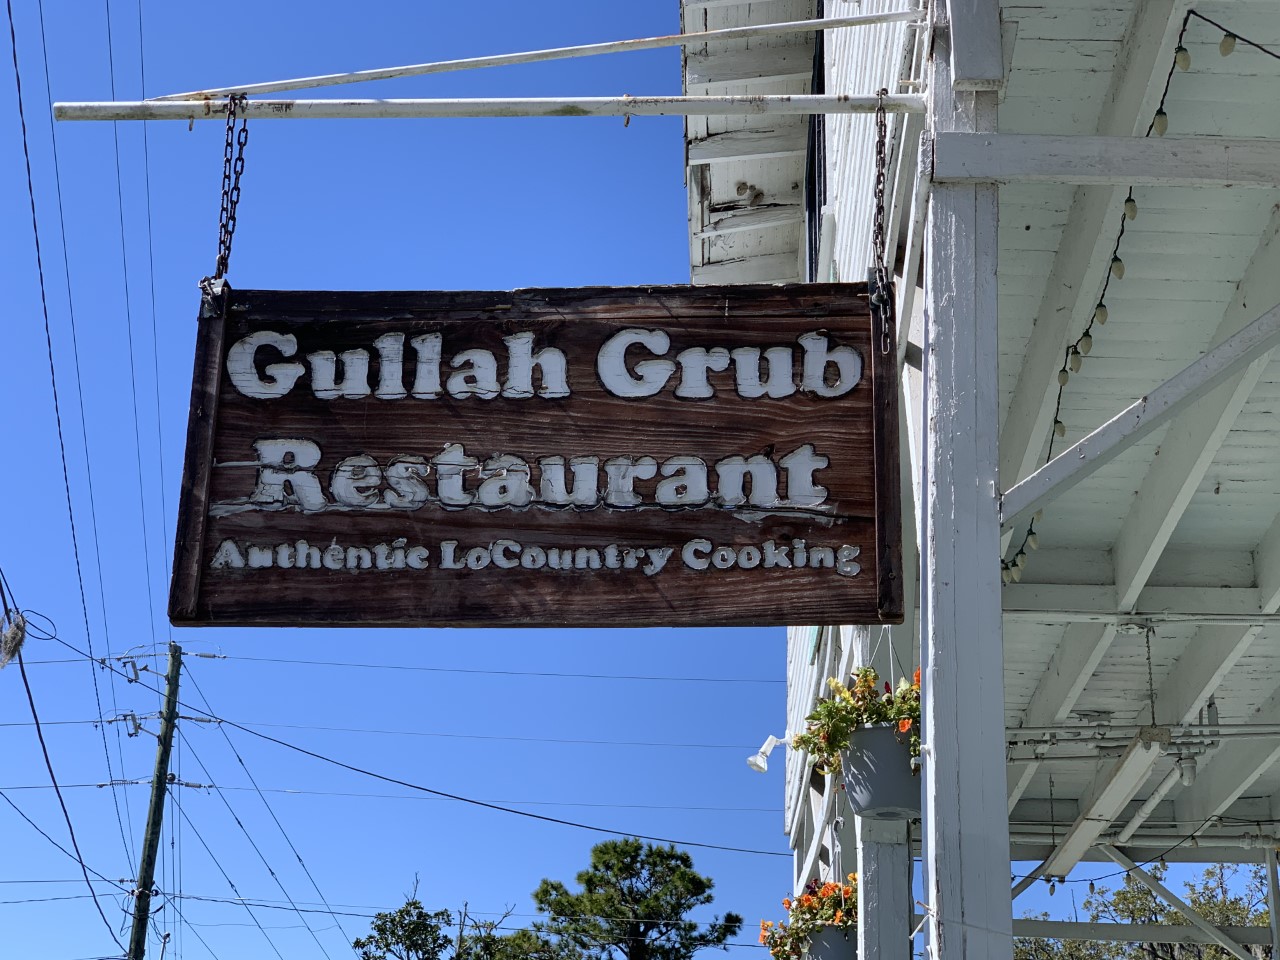 sign that says Gullah grub restaurant